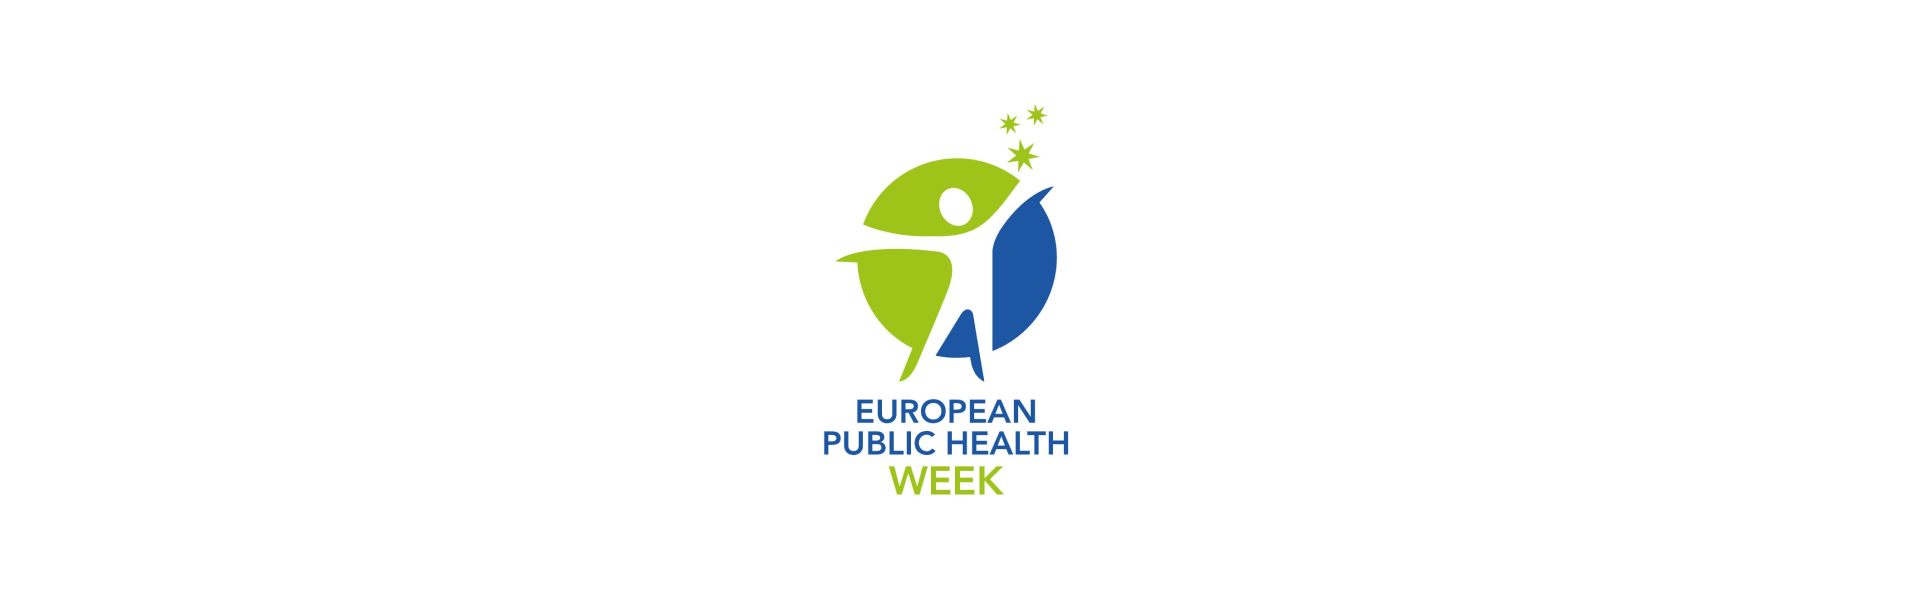 European Public Health Week